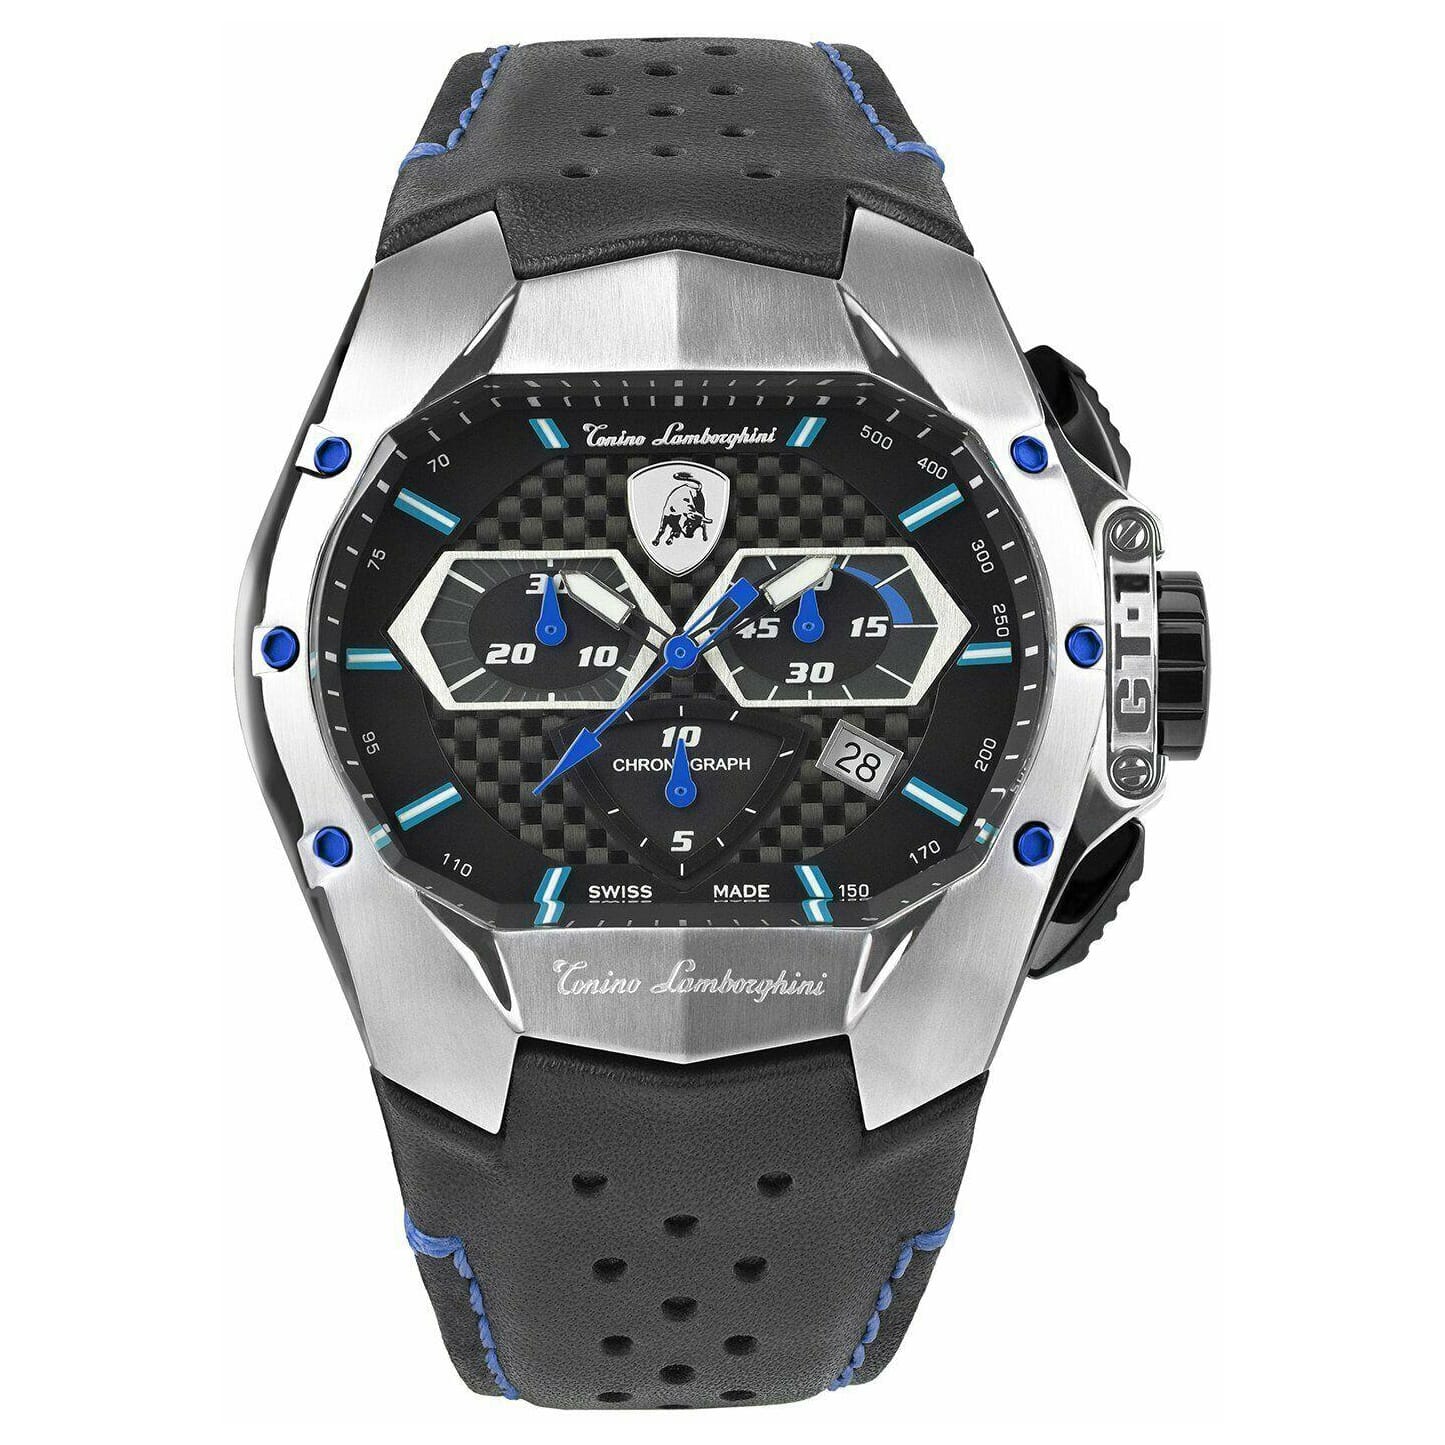 Zegarek męski Tonino Lamborghini T9GC-SS + Dodatkowy pasek